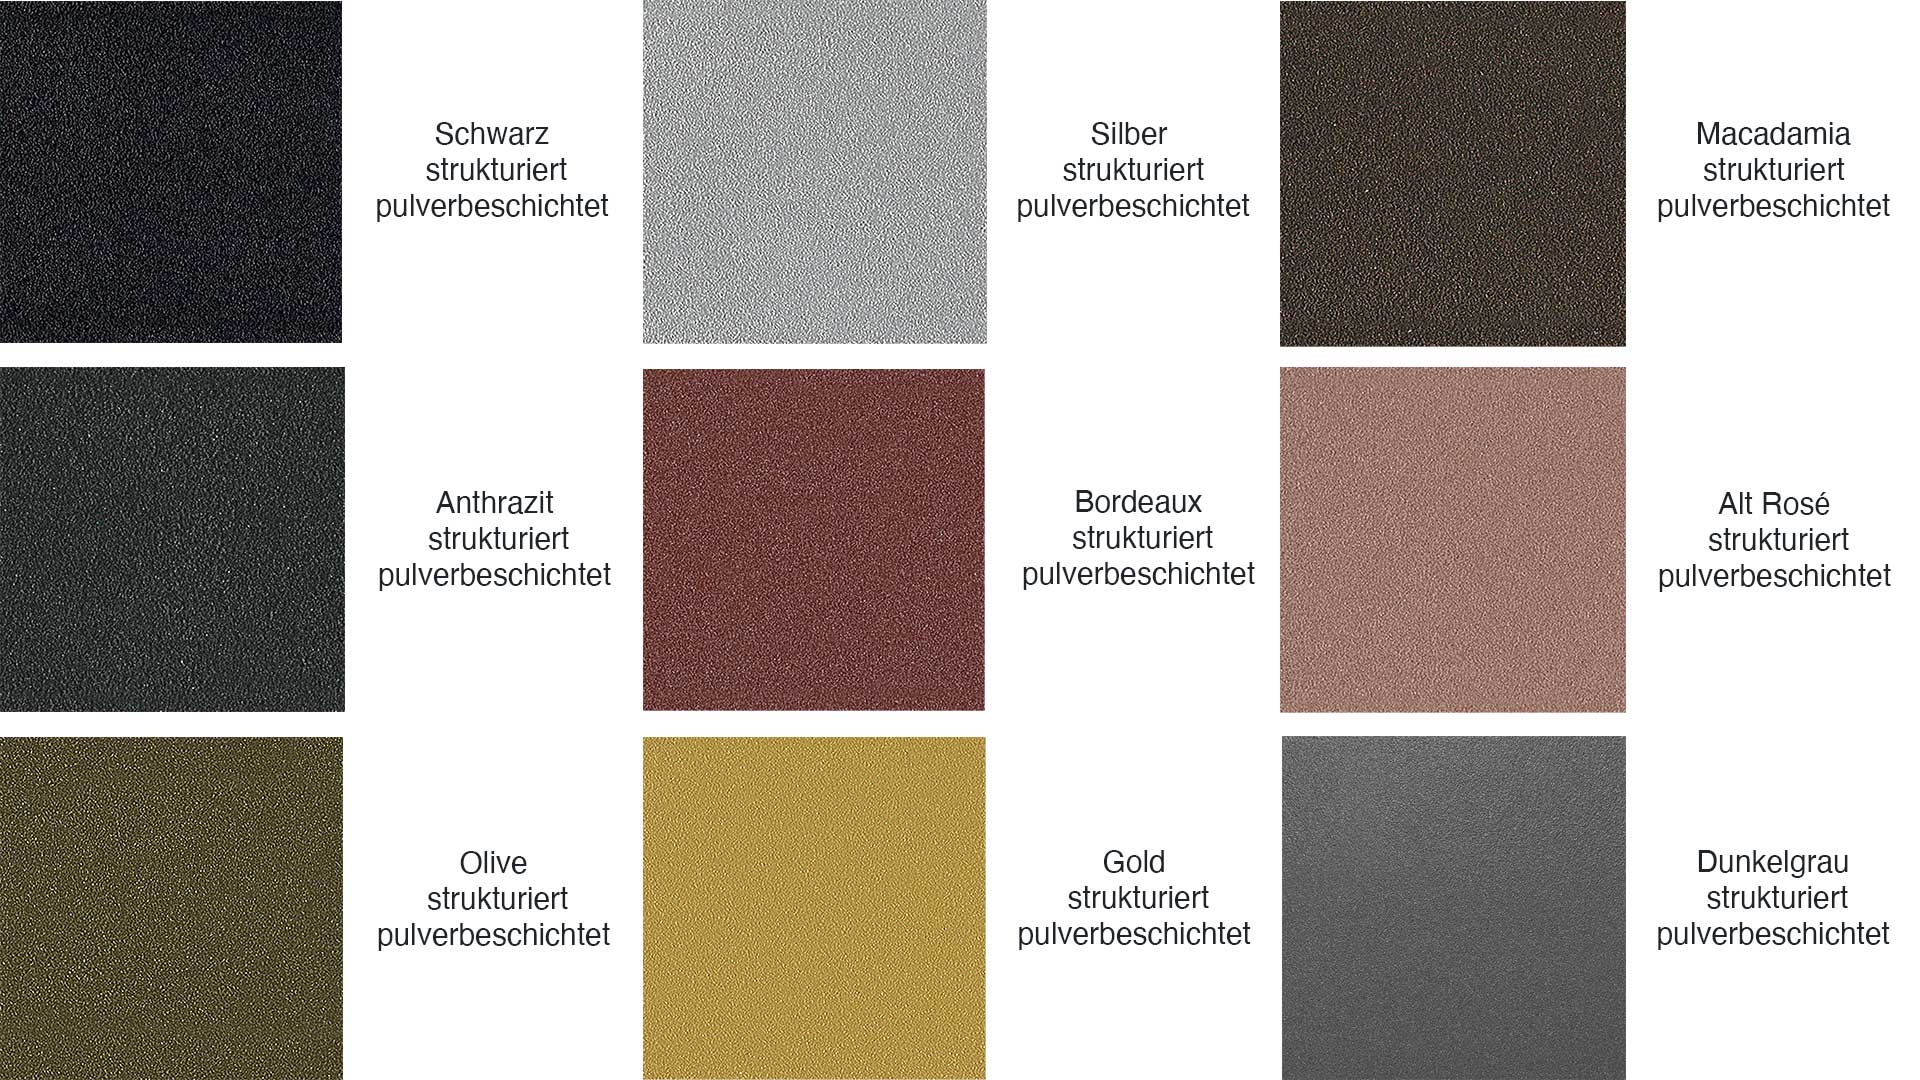 tischgestell-metall-lack-filigran-grau-anthrazit-schwarz-oliv-gold-alt-rose-bordeaux-rot-macadamia-silber-dunkelgrau-t-table